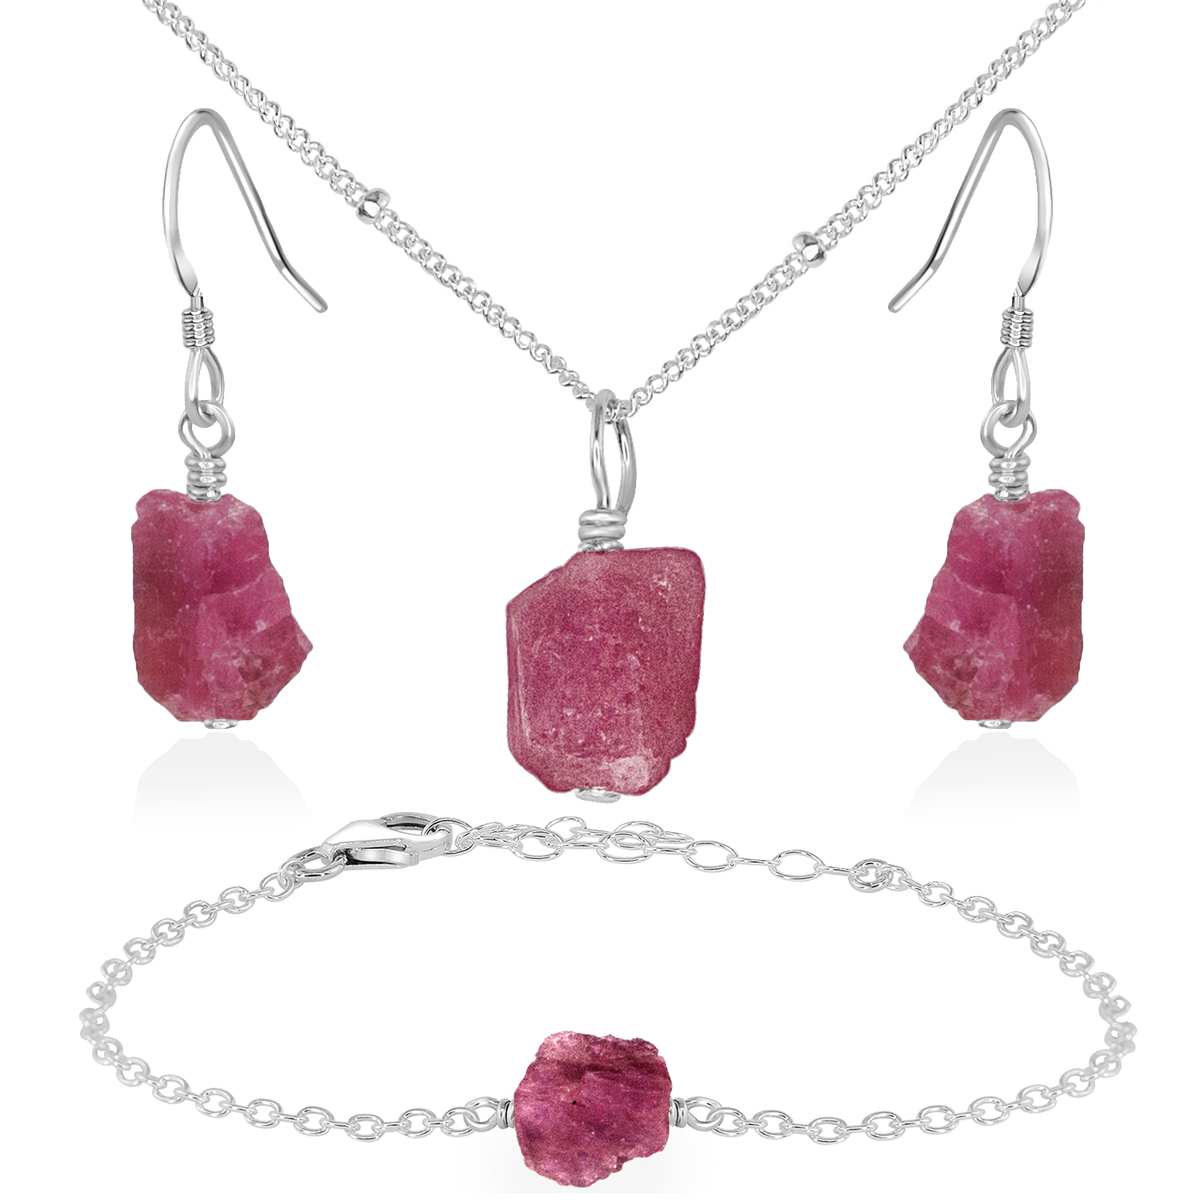 Raw Pink Tourmaline Crystal Jewellery Set - Raw Pink Tourmaline Crystal Jewellery Set - Sterling Silver / Satellite / Necklace & Earrings & Bracelet - Luna Tide Handmade Crystal Jewellery